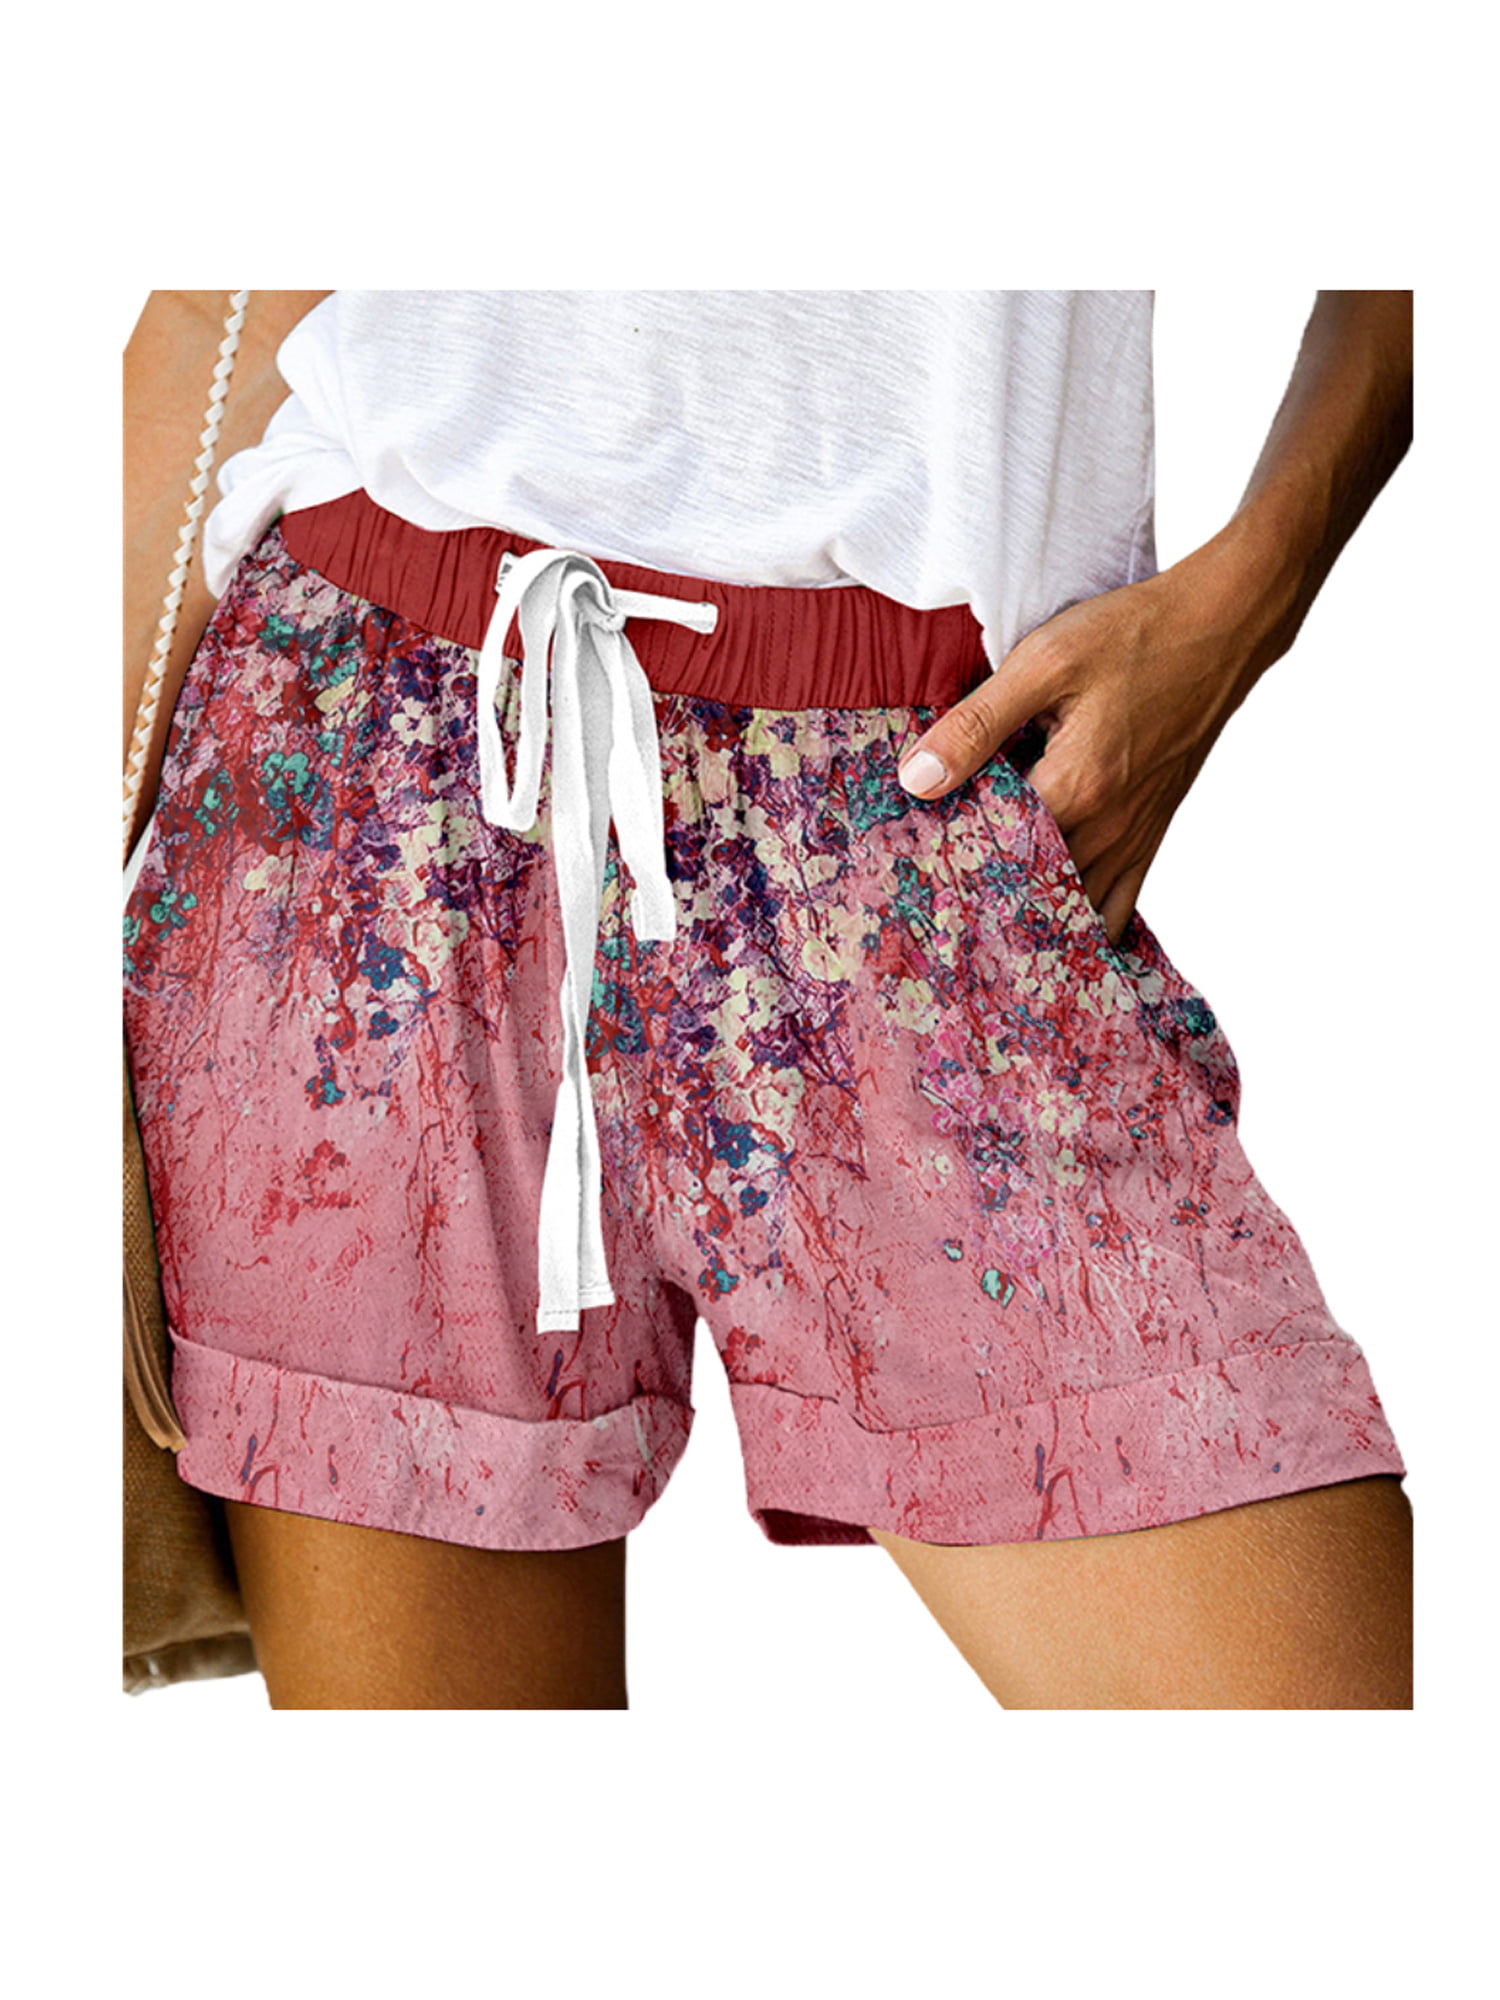 HANWOMEN Plus Size Womens Boho Floral Shorts Casual Beach Loose Wide Leg  Hot Pants Red Wine S - Walmart.com